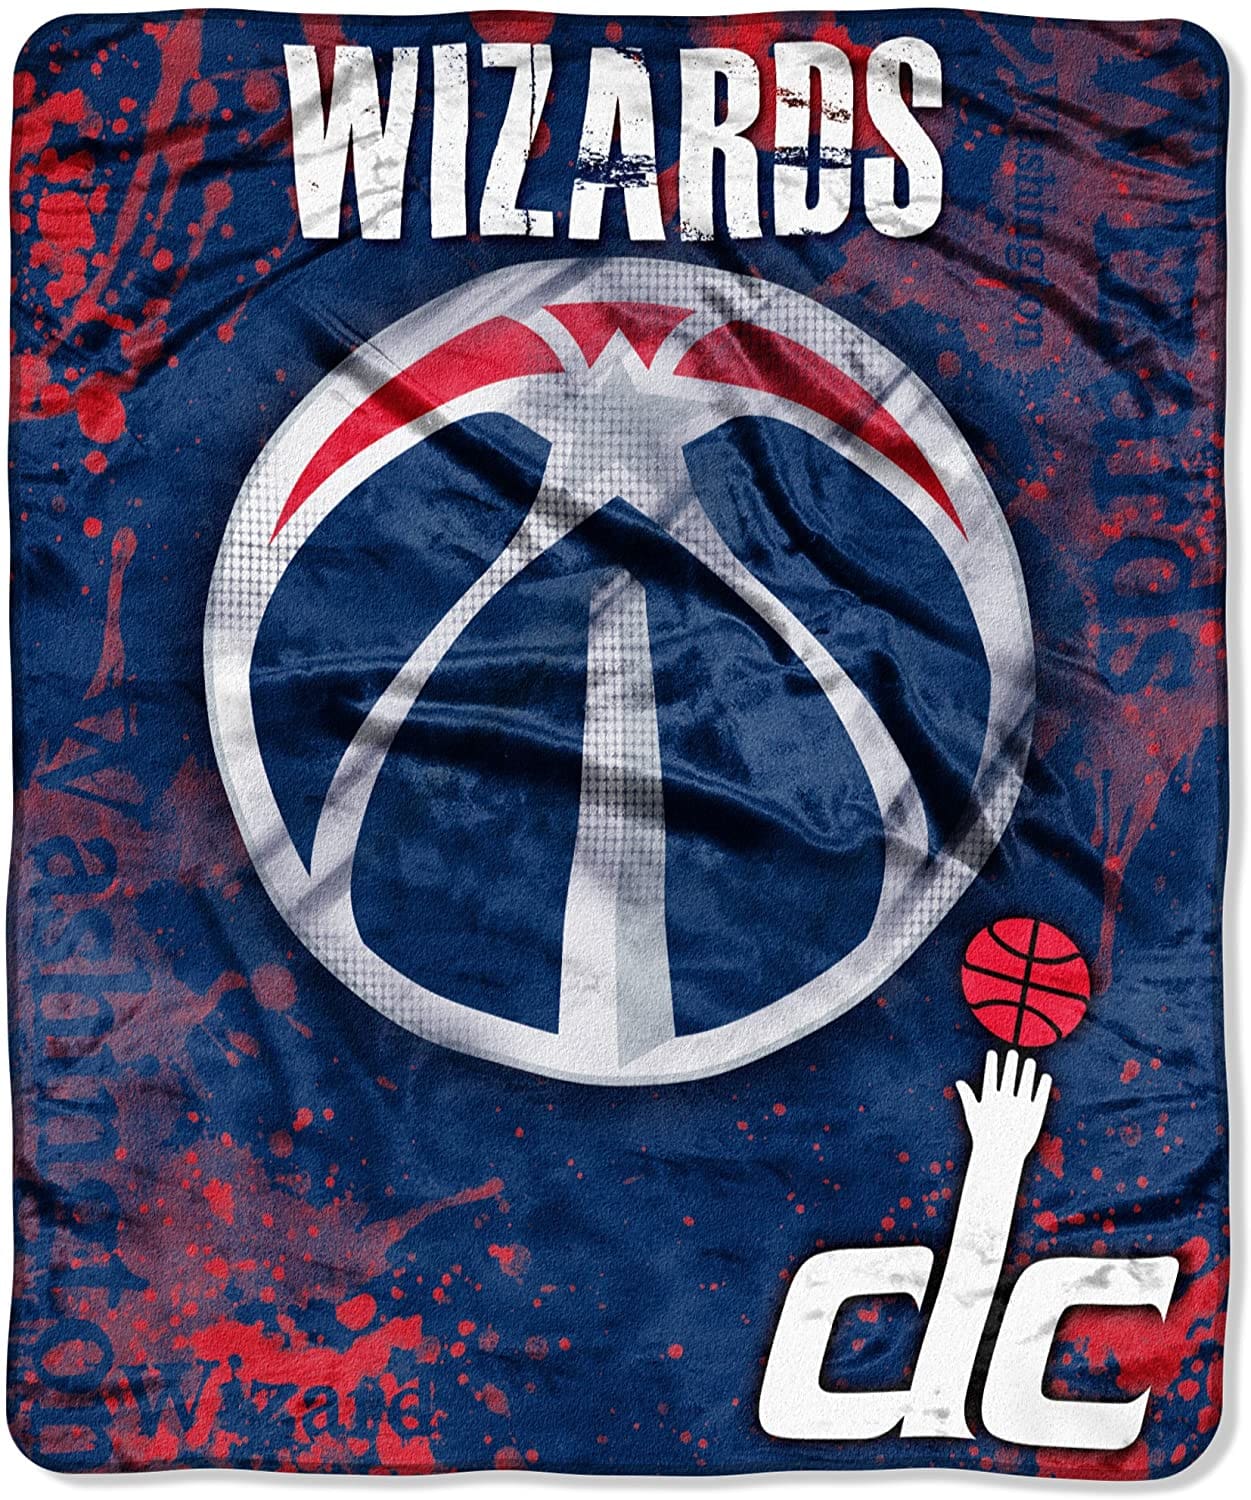 Officially Licensed Nba Throw Washington Wizards Fleece Blanket